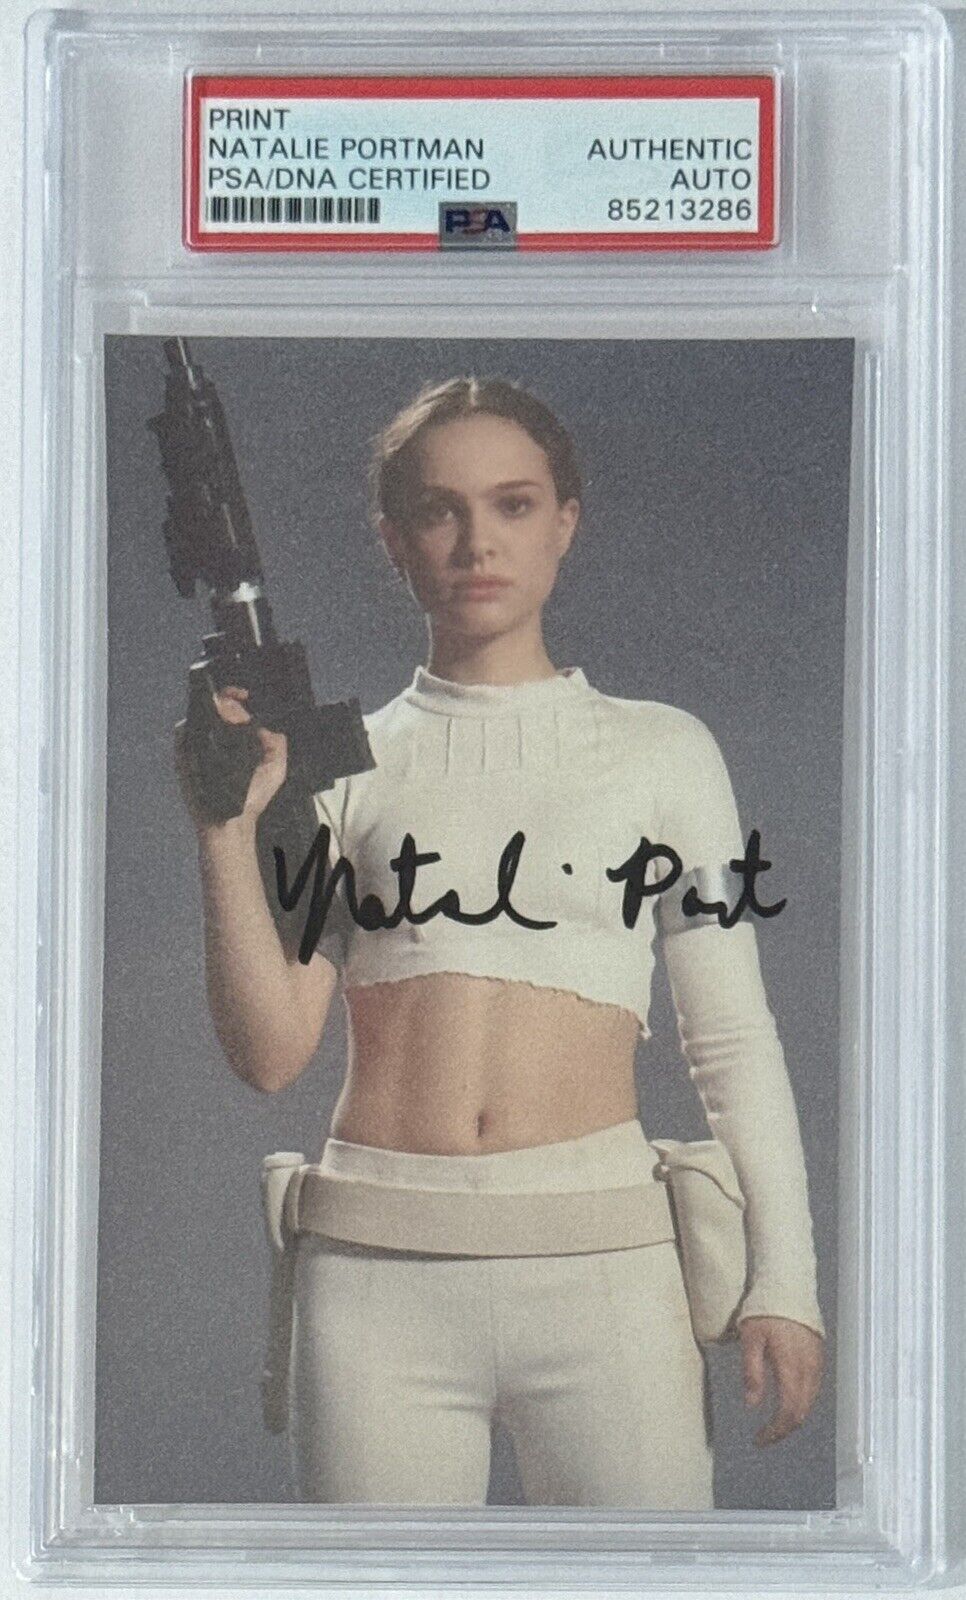 Natalie Portman SIGNED Star Wars Padme Amidala Print Picture PSA DNA Autographed